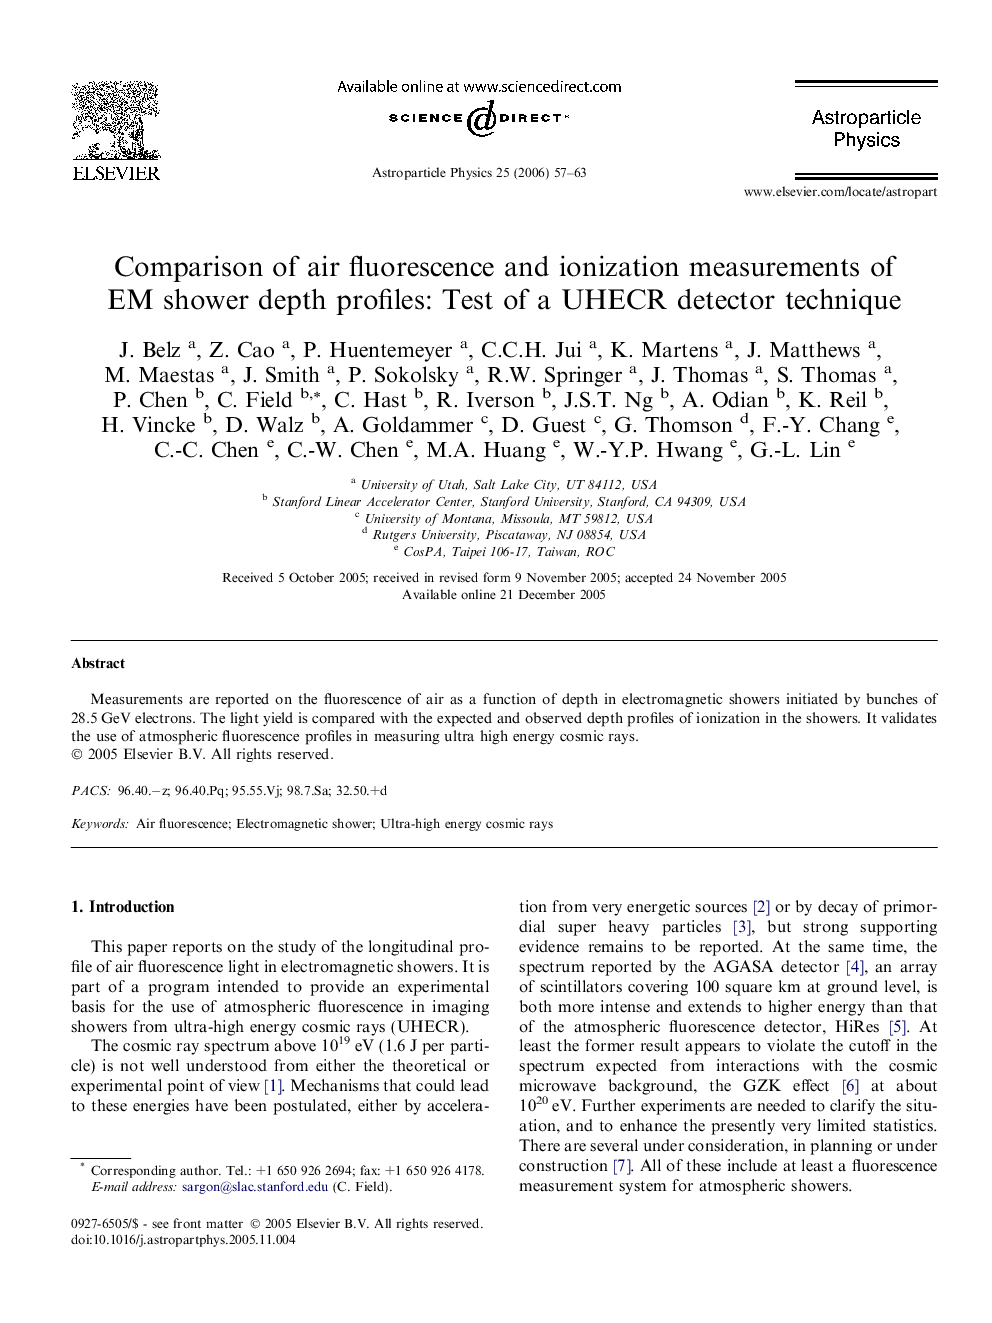 Comparison of air fluorescence and ionization measurements of EM shower depth profiles: Test of a UHECR detector technique